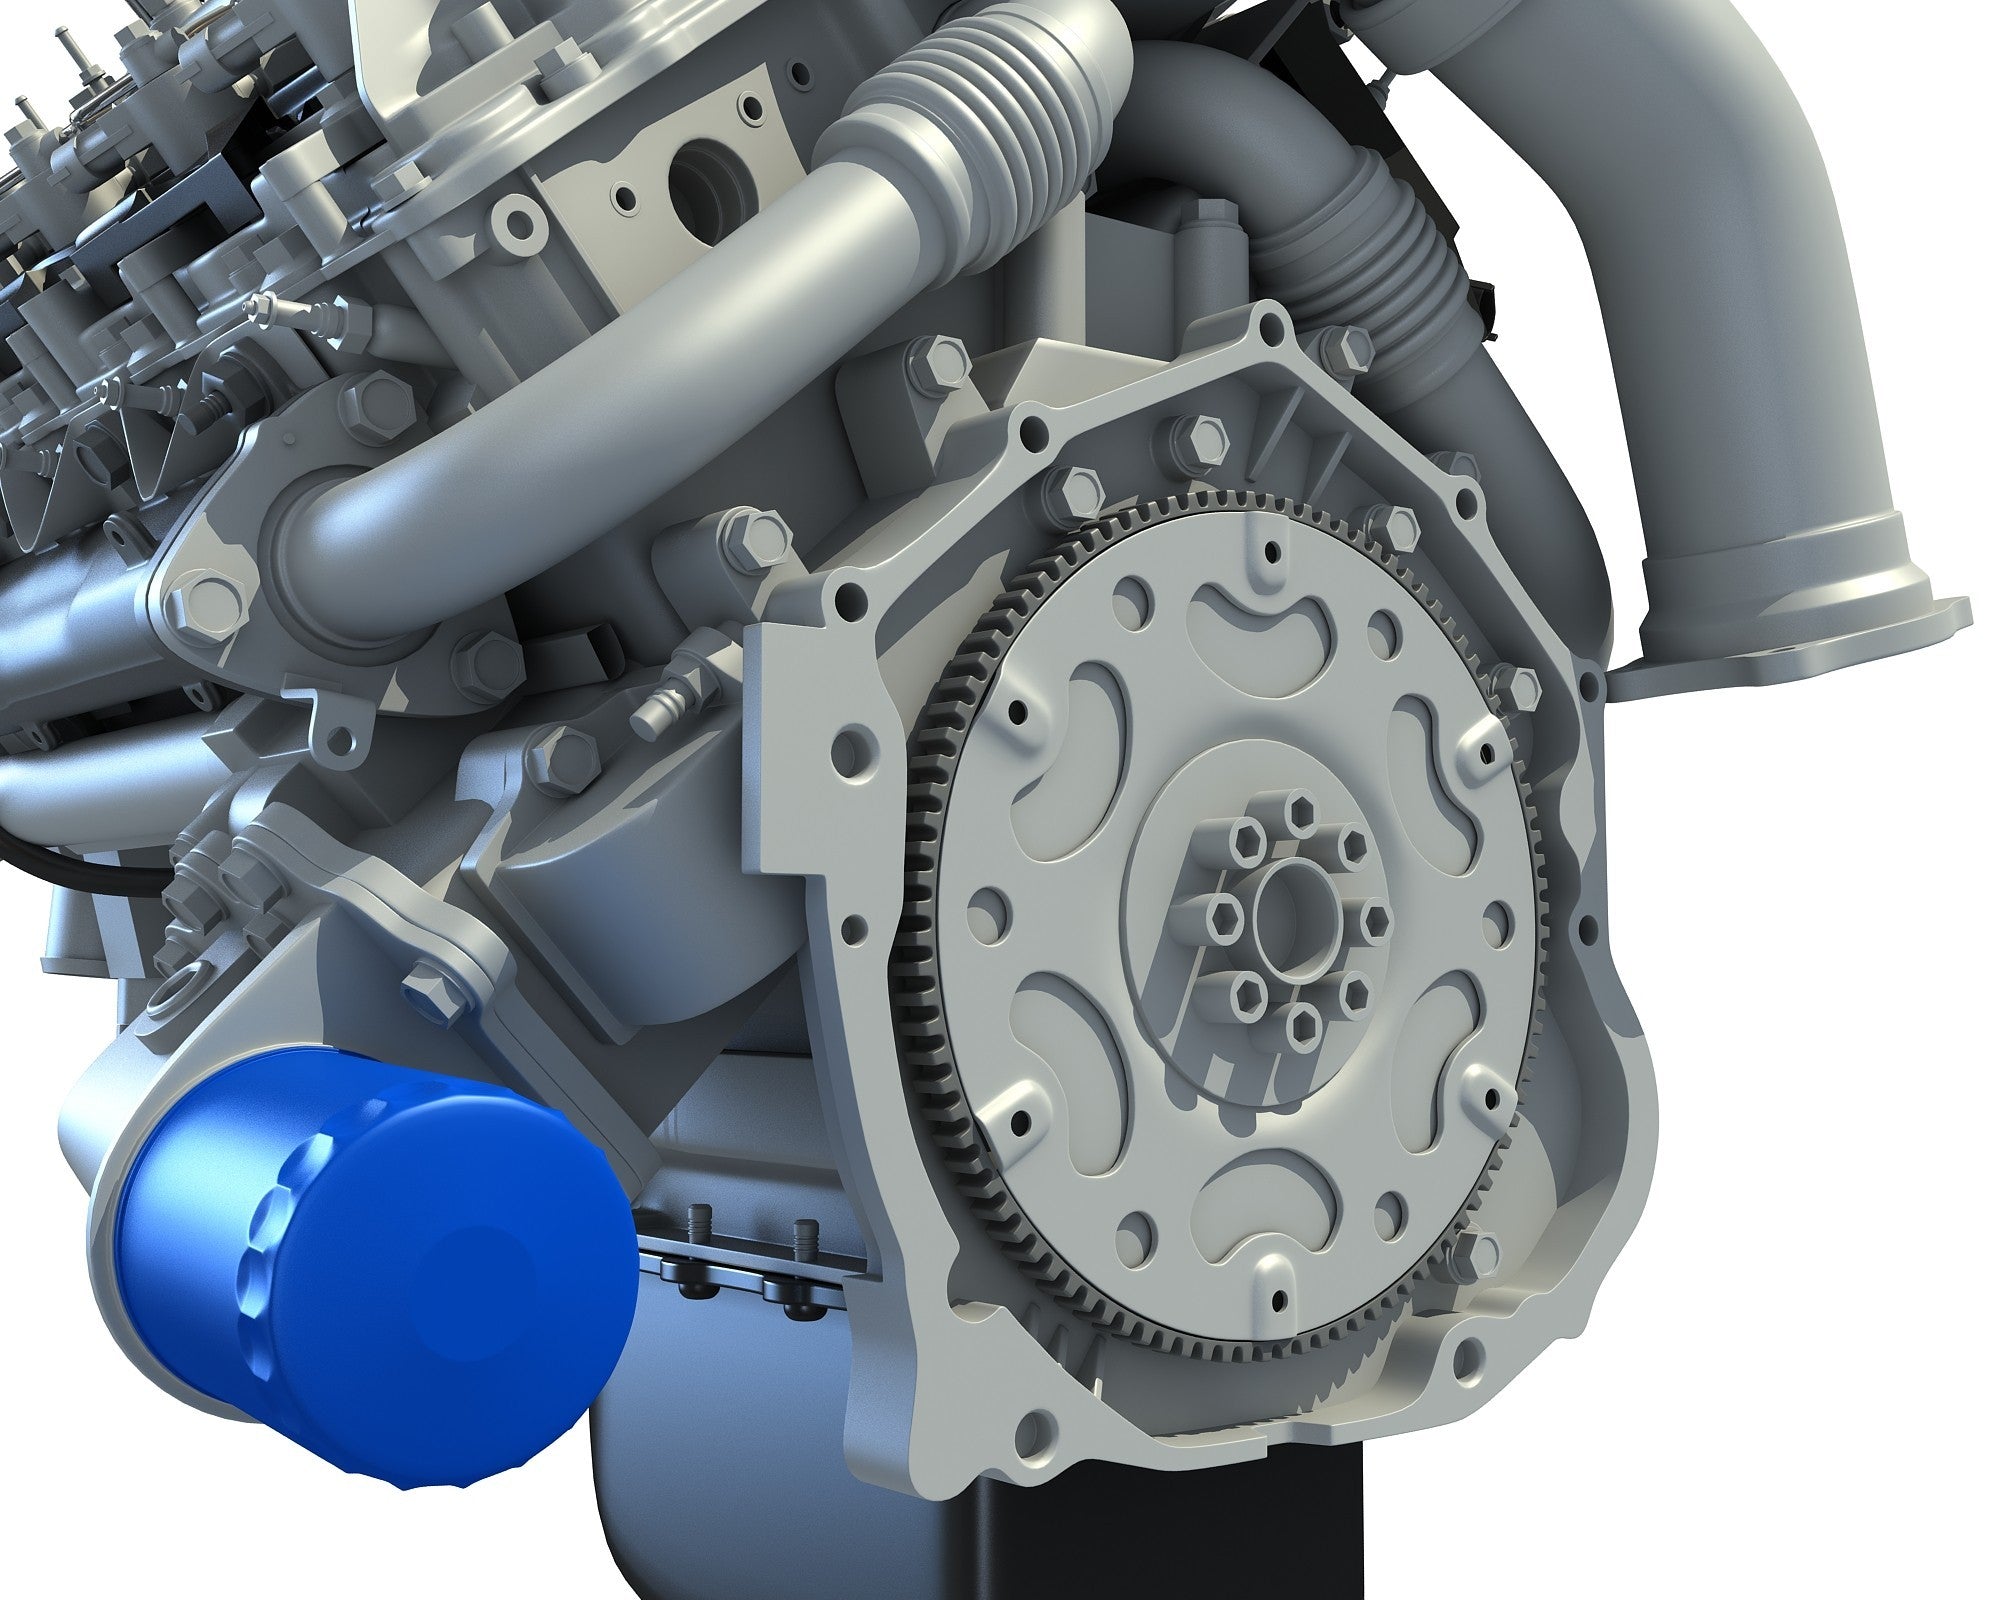 Duramax V8 Turbo Engine